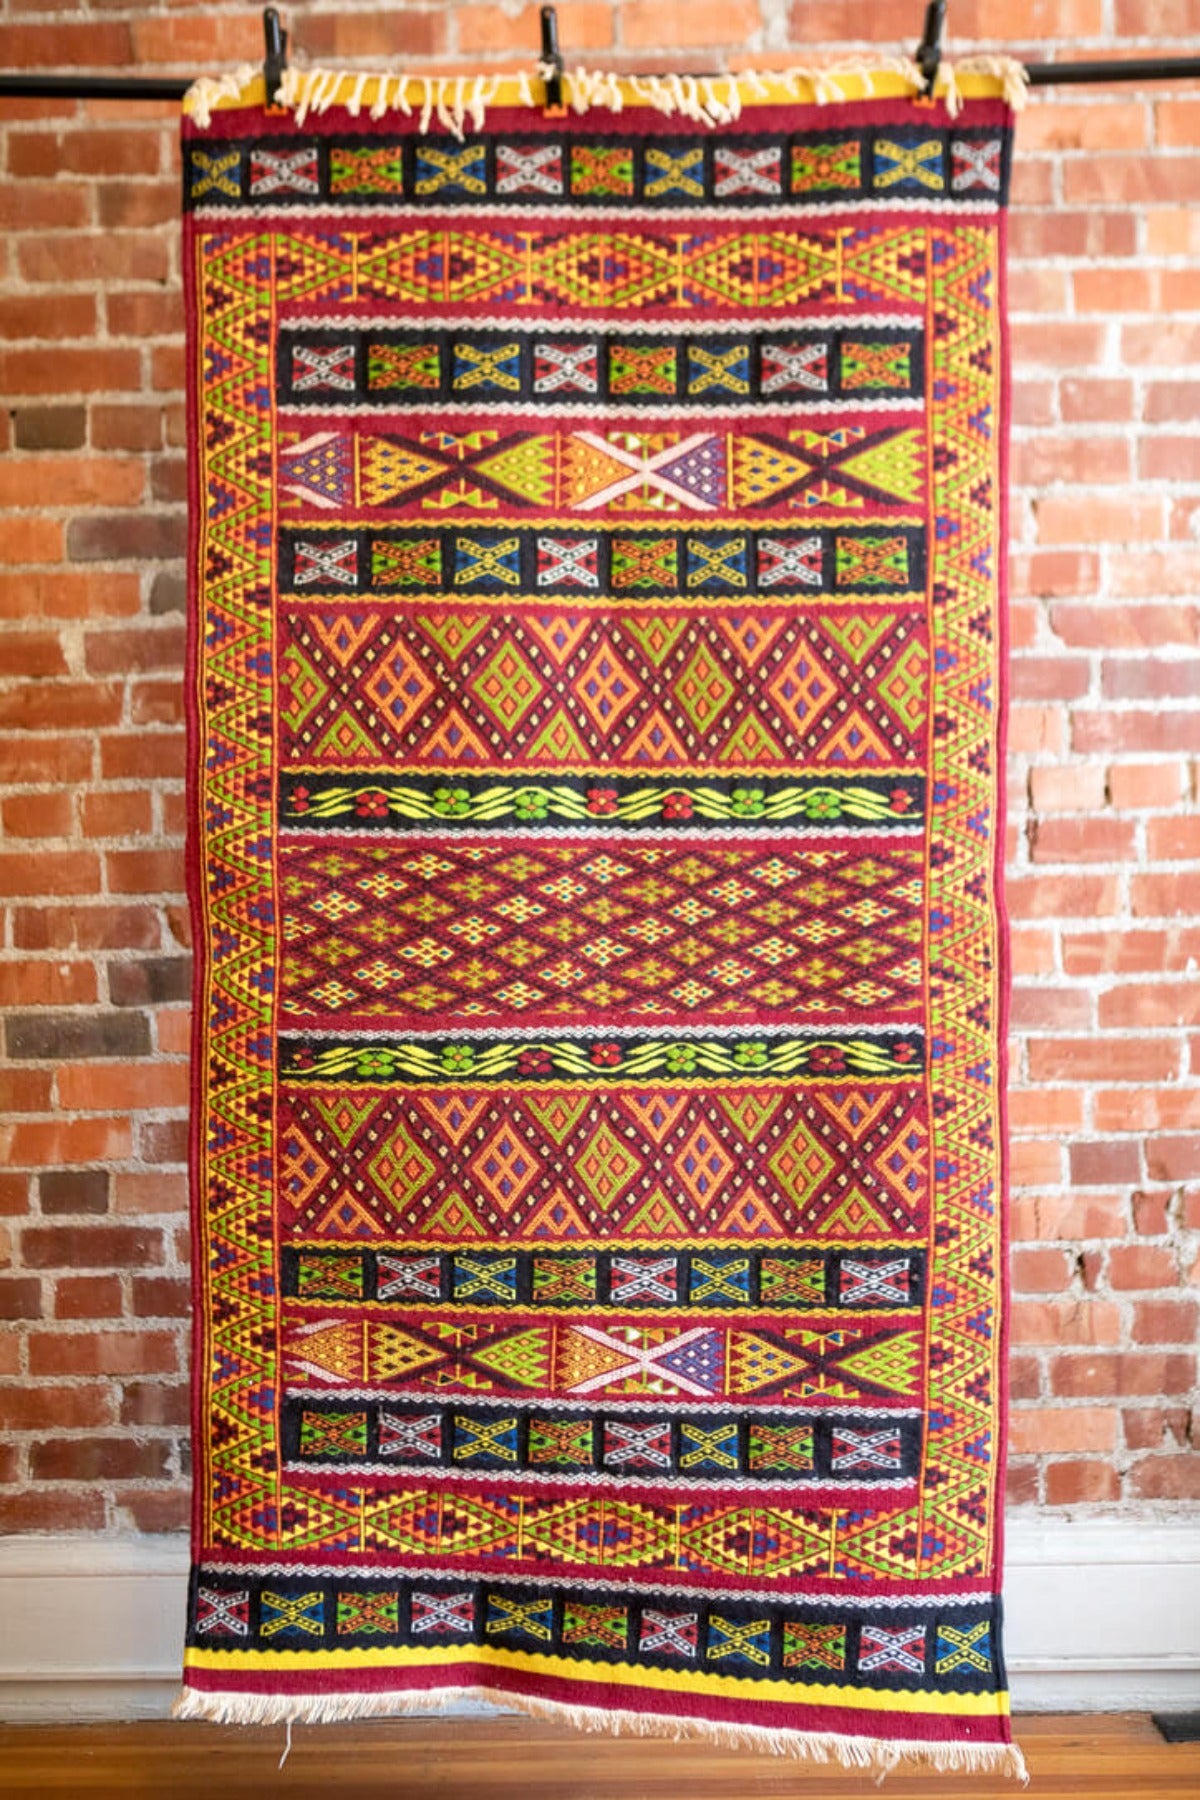 Multicolored patterned Berber rug